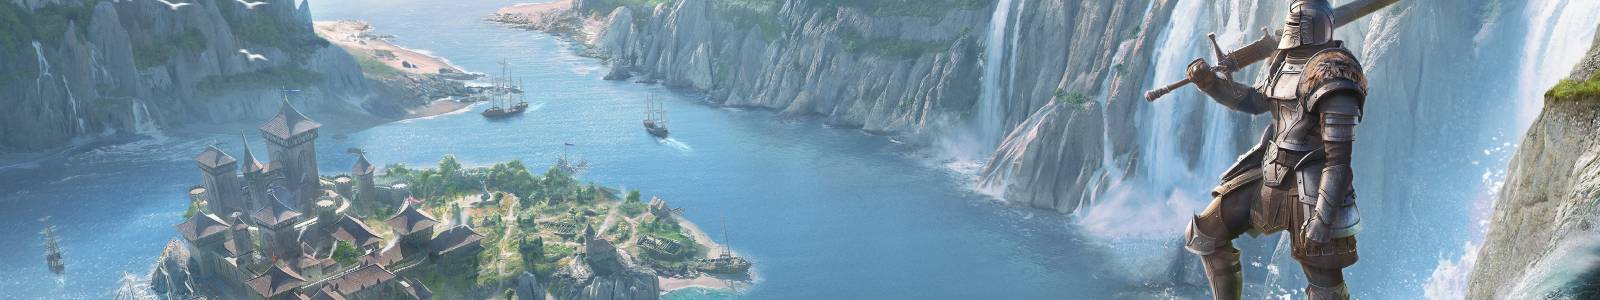 All High Isle Treasure Map Locations in ESO (The Elder Scrolls Online) header